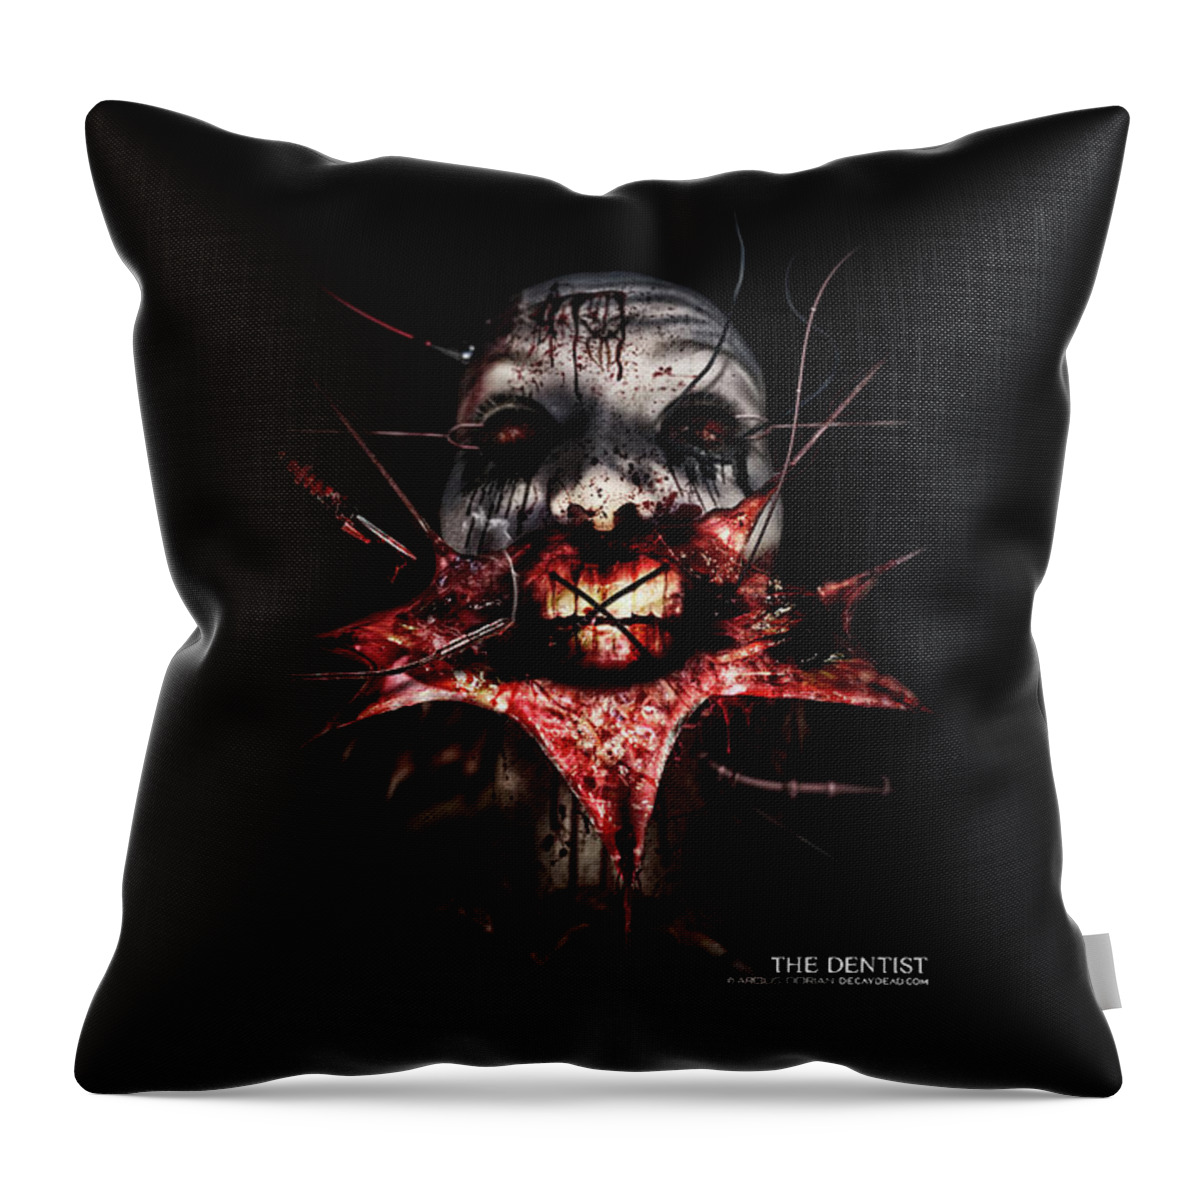 Argus Dorian Throw Pillow featuring the digital art The Dentist by Argus Dorian Decaydead dark artist by Argus Dorian